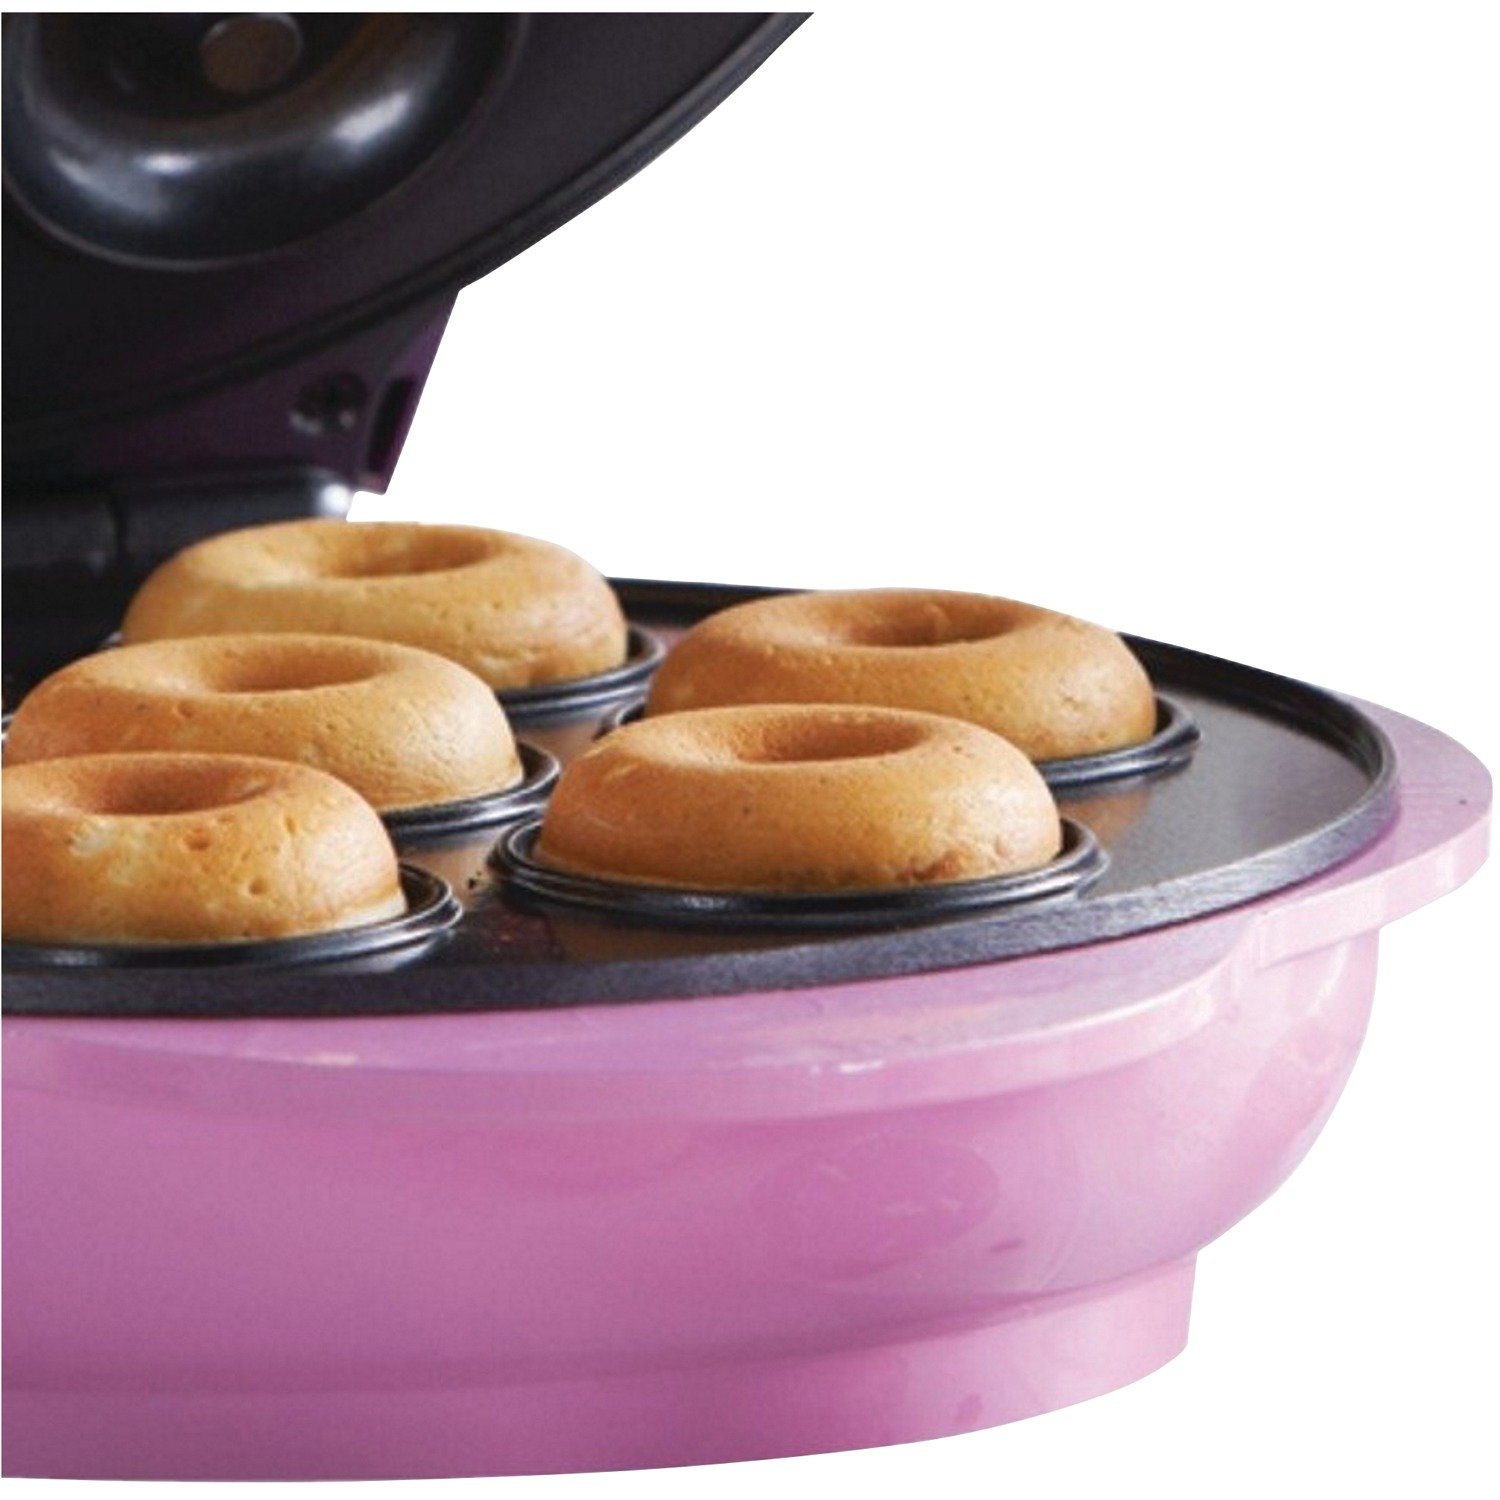 Brentwood Mini Donut Maker Machine, Non-Stick, Pink